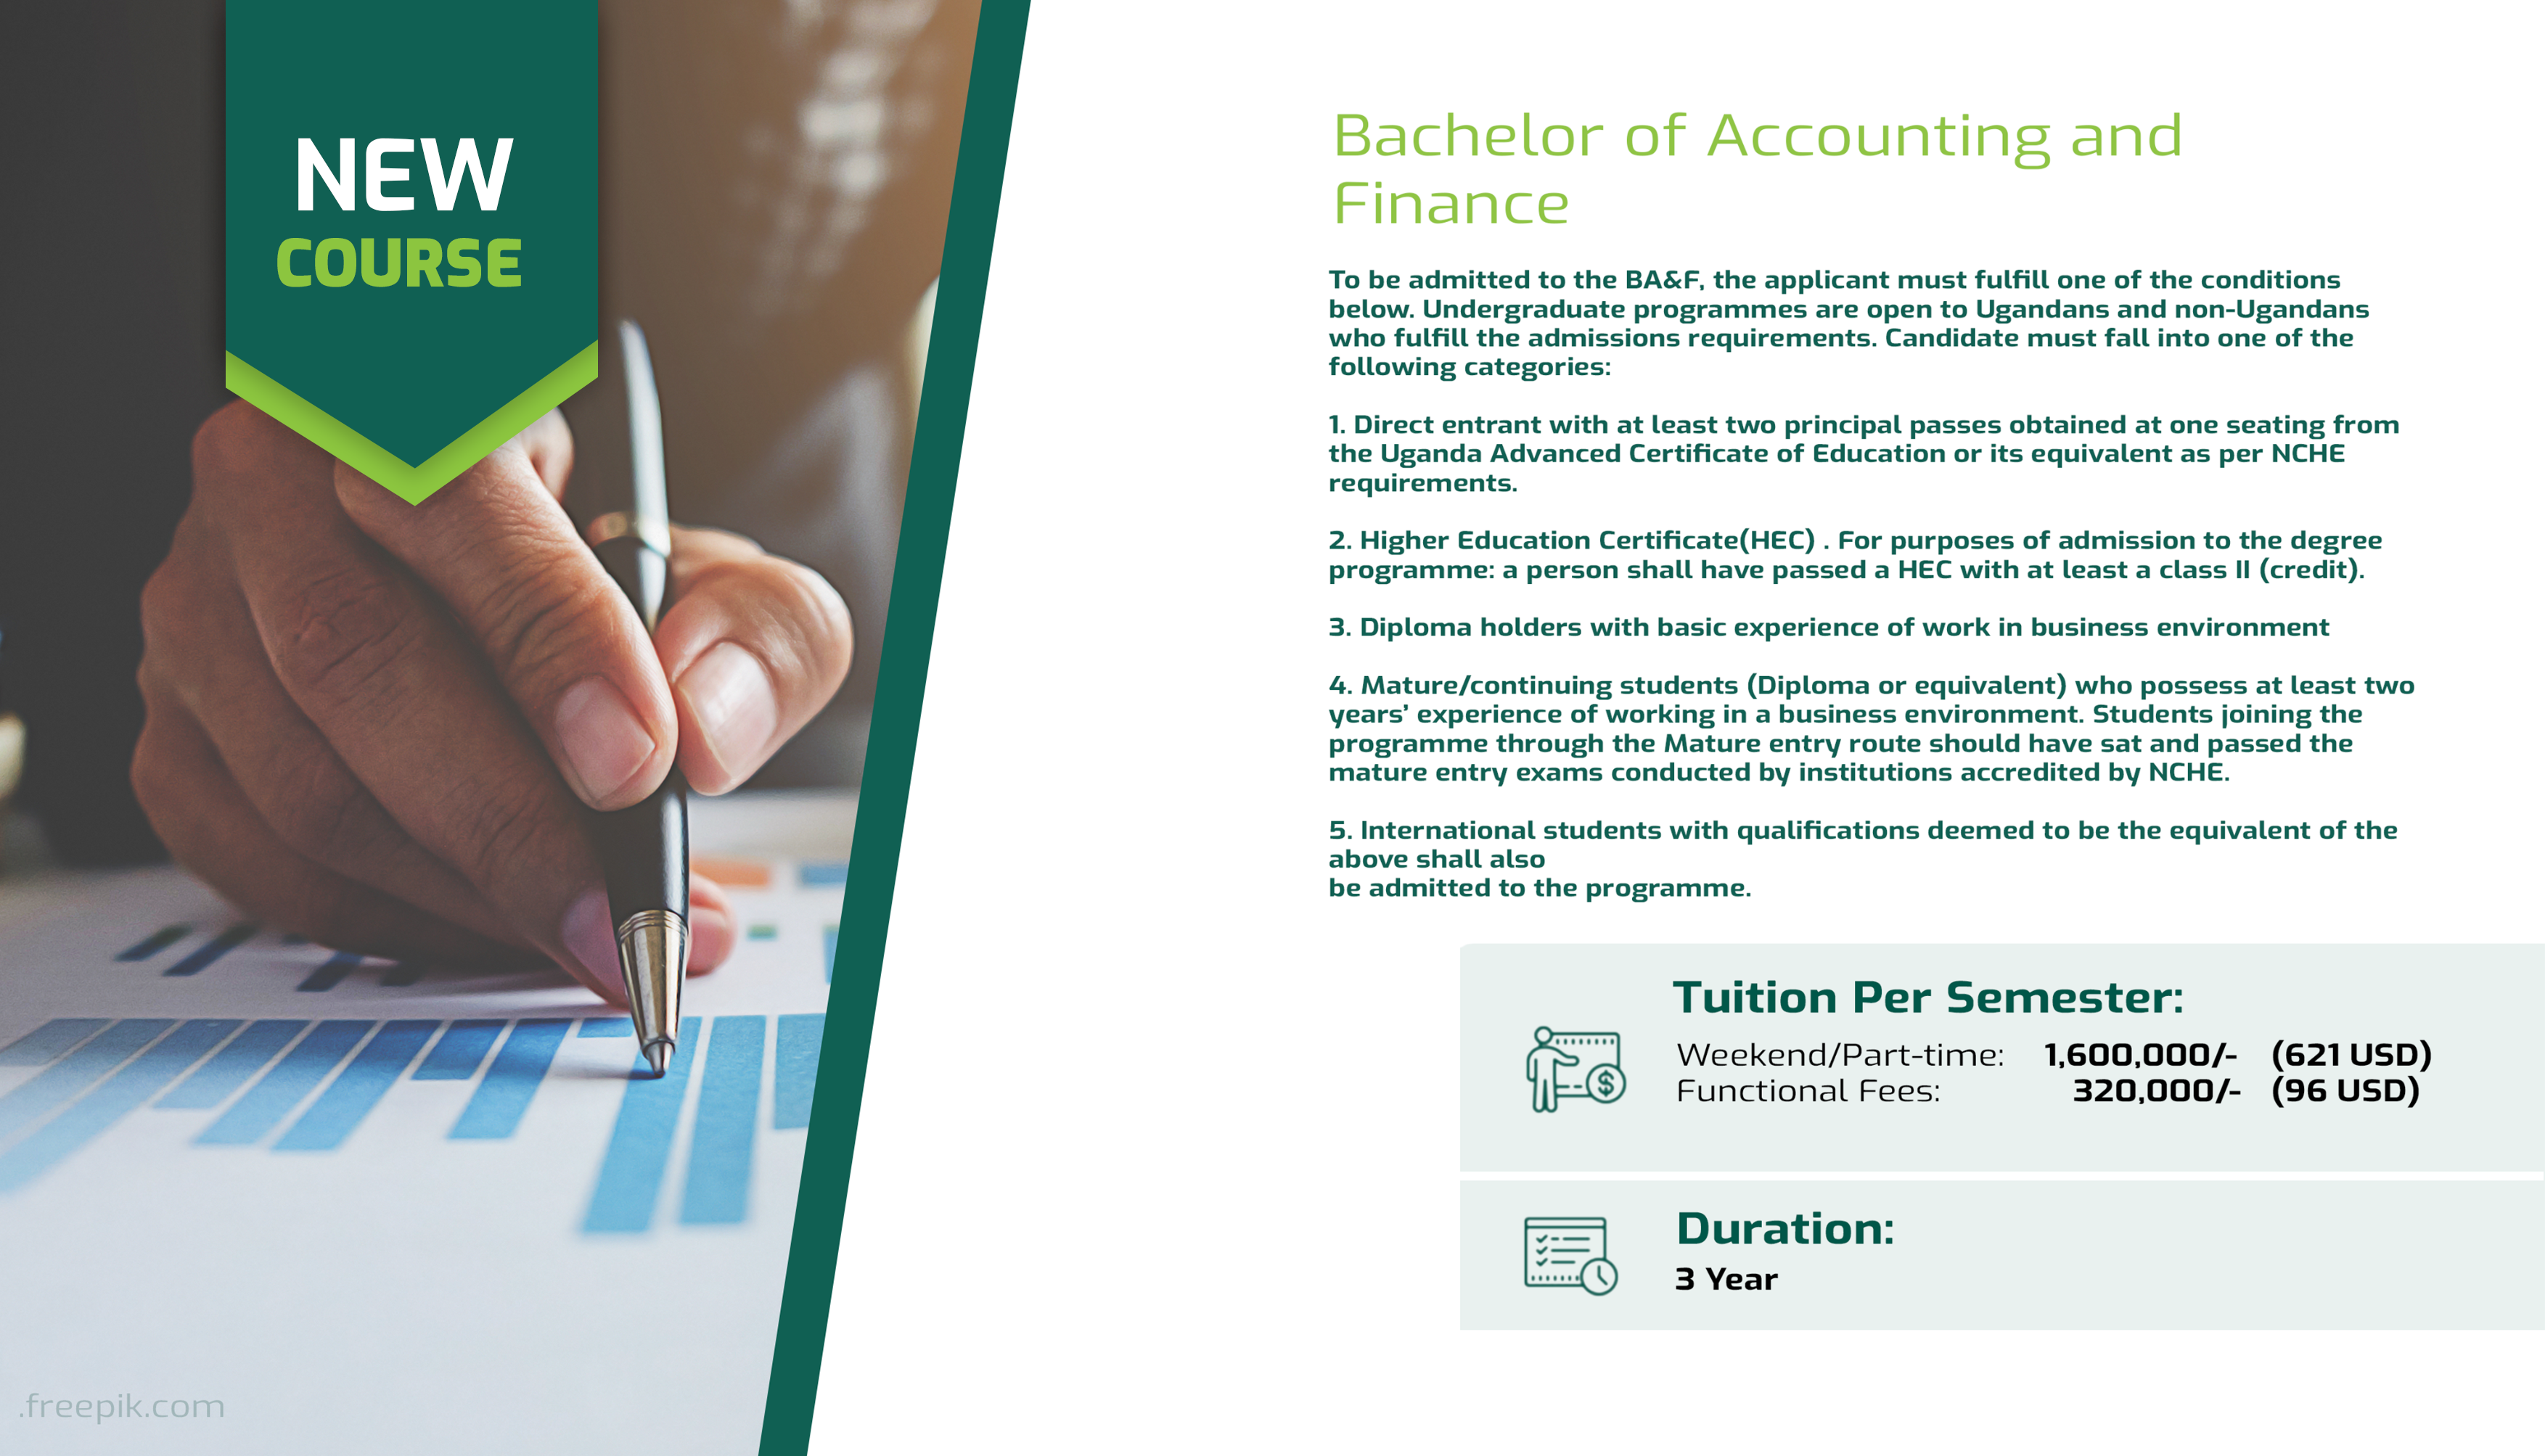 Bachelor of Accounting and Finance